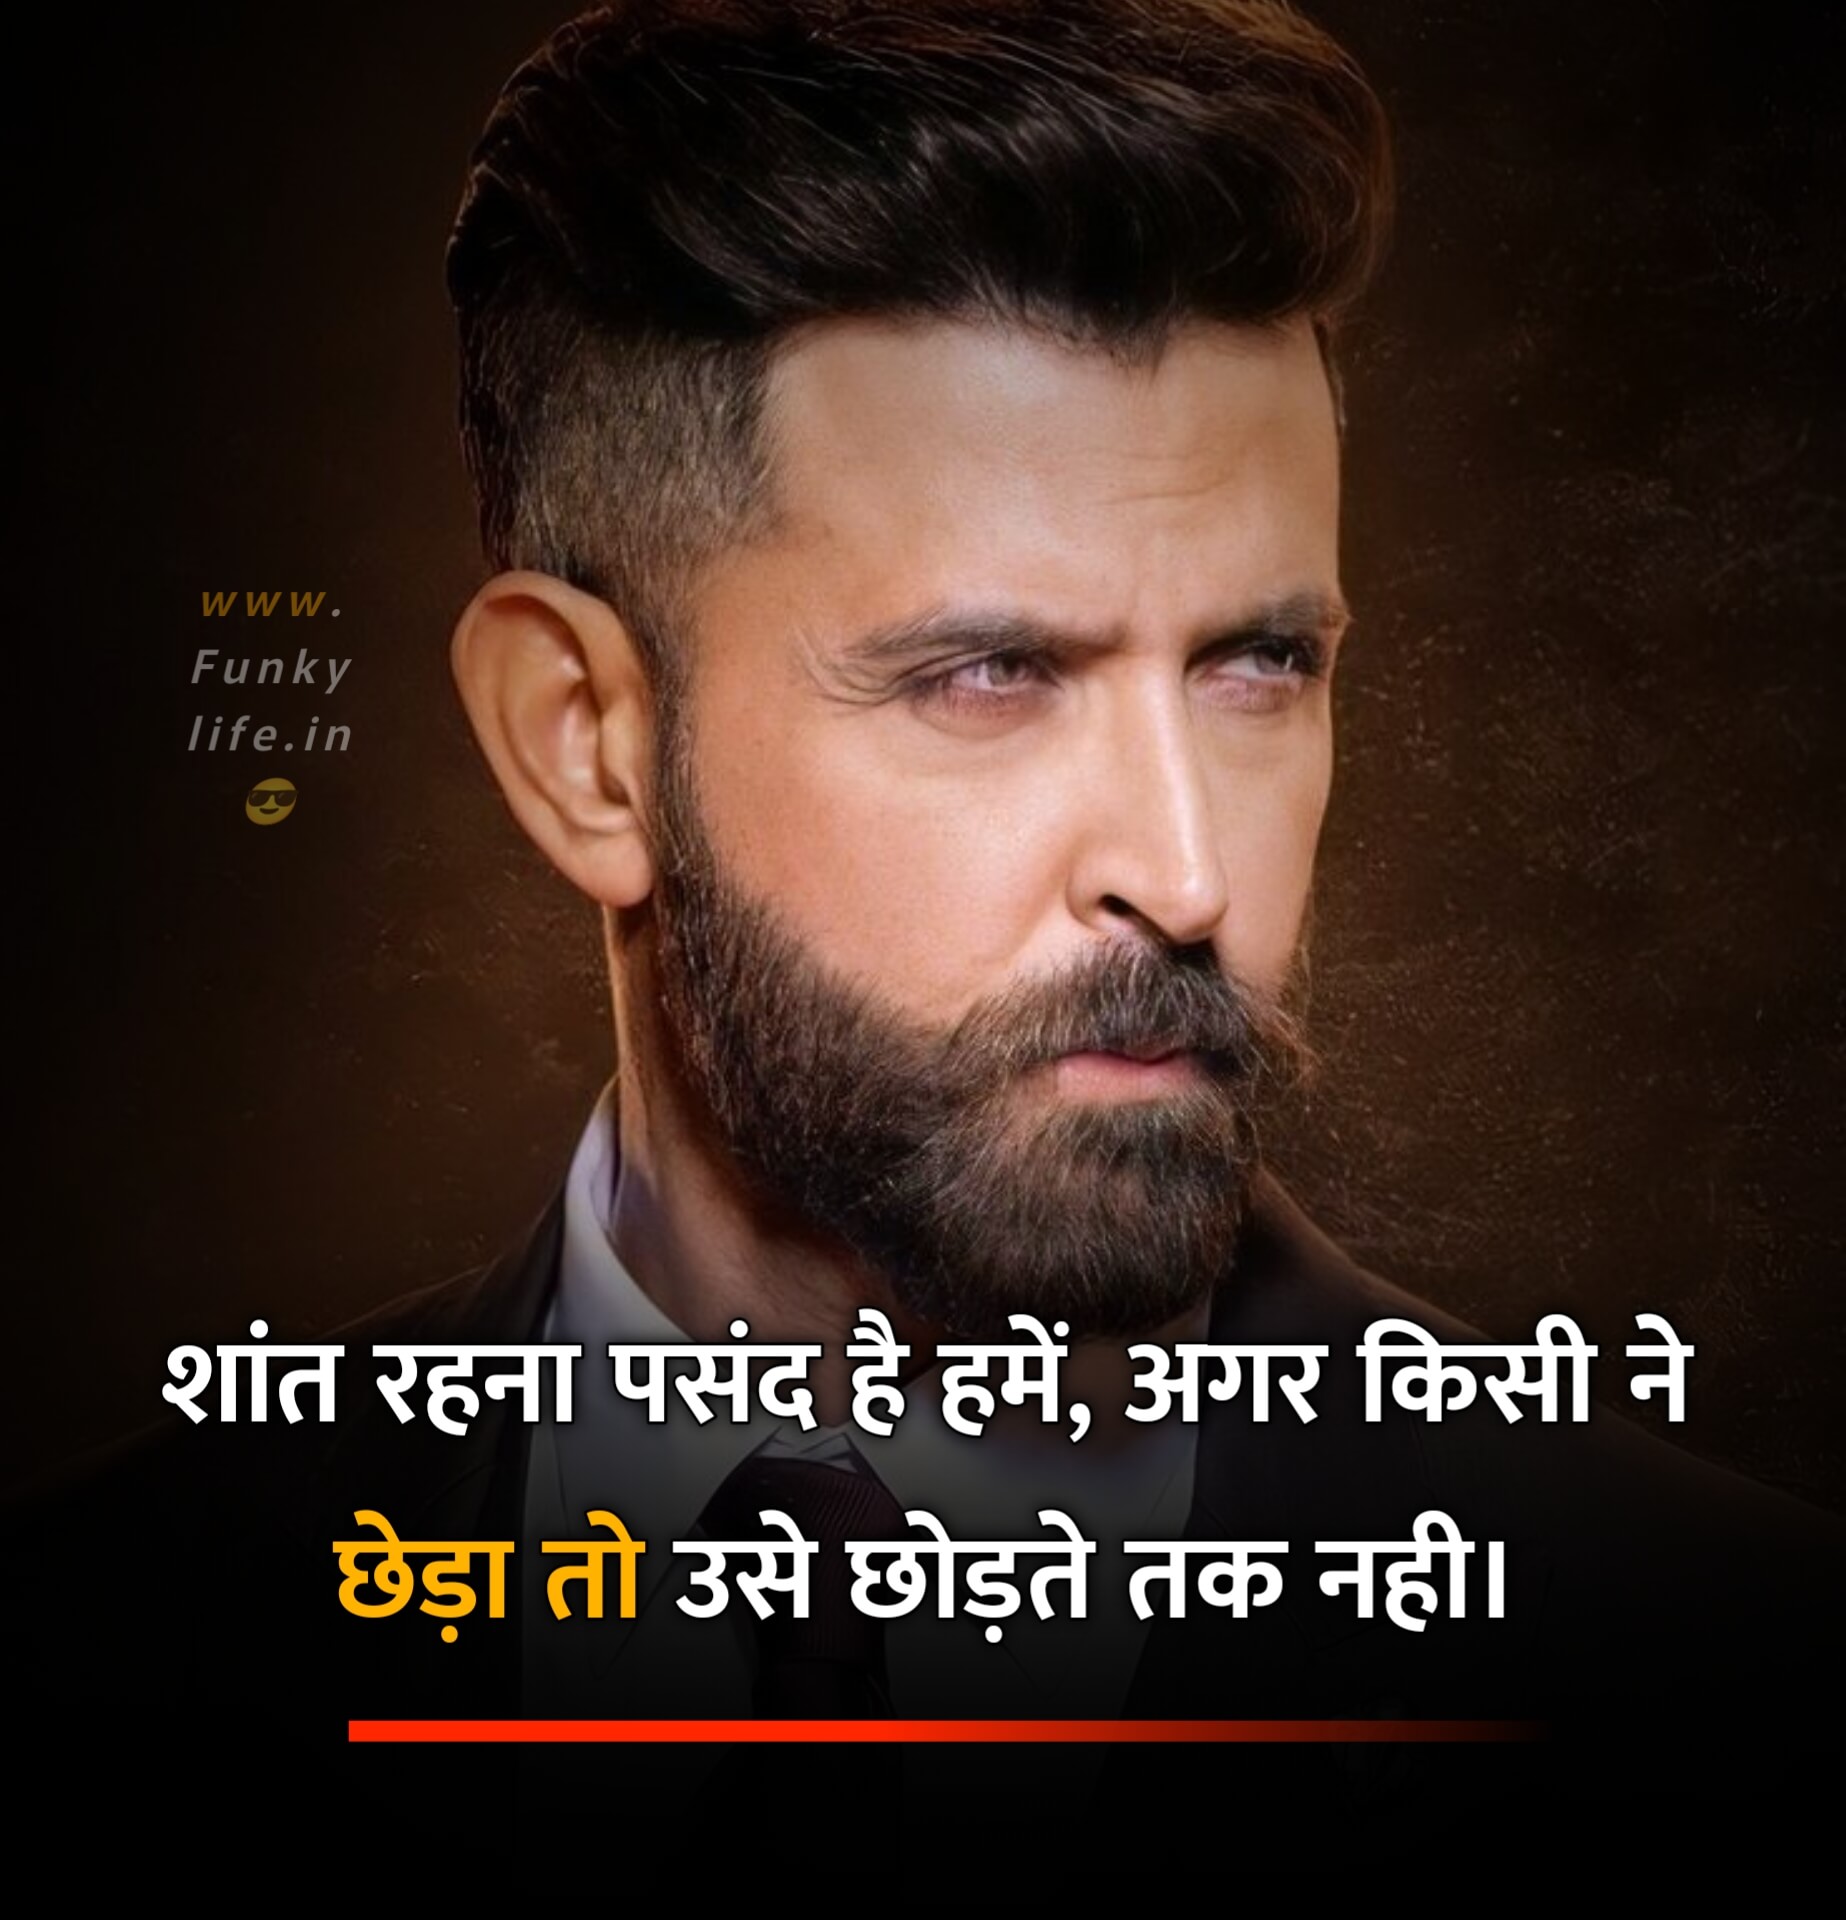 Royal Attitude Quote in Hindi